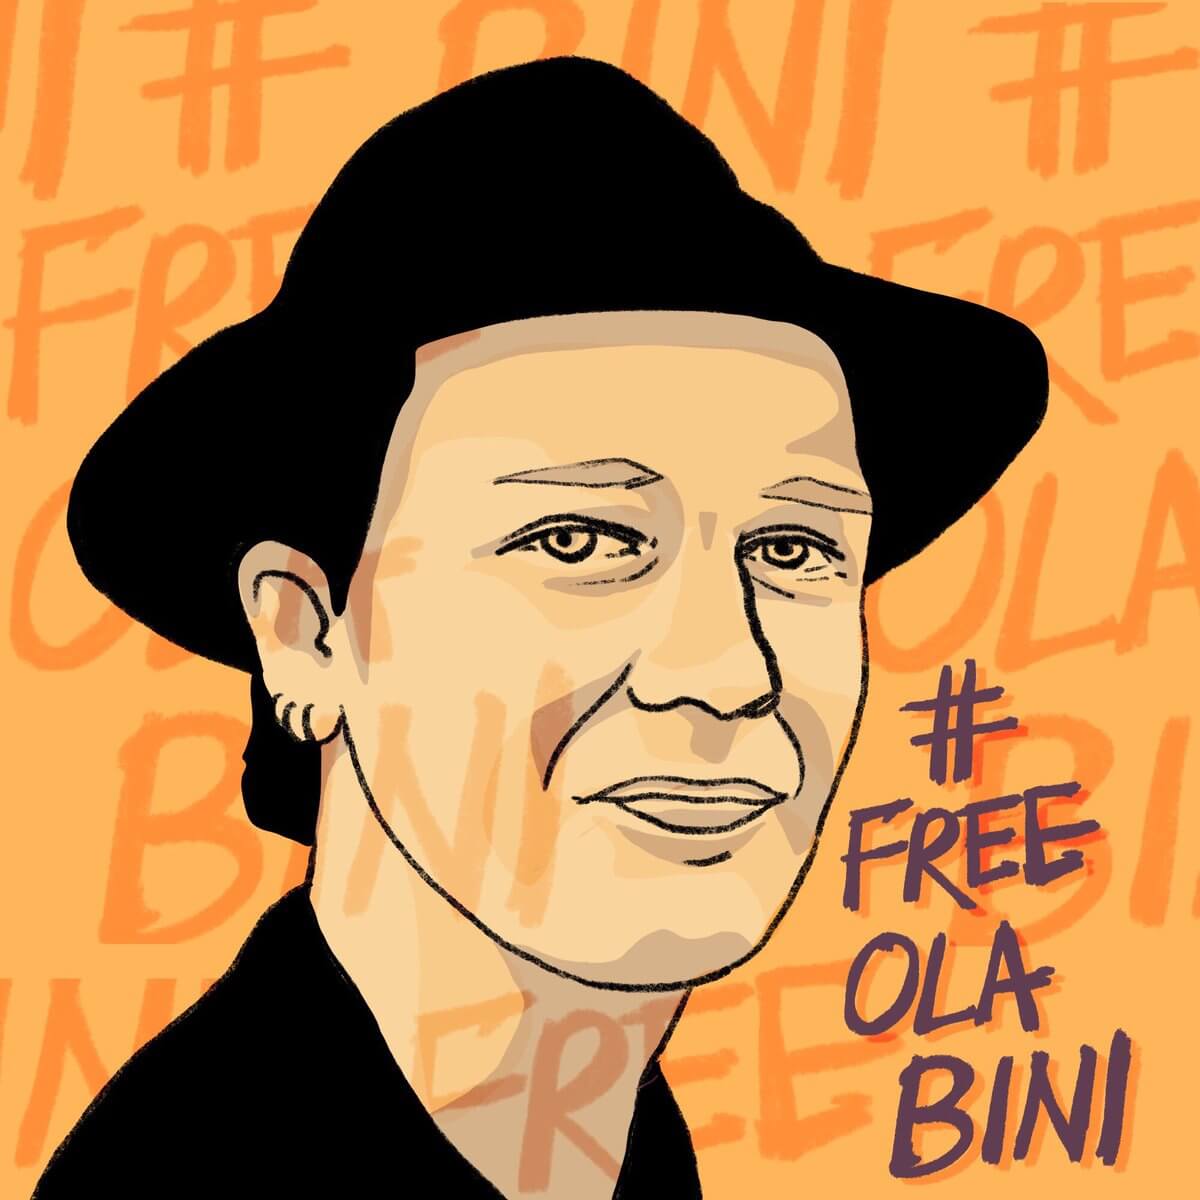 Ola Bini arrestato in Ecuador